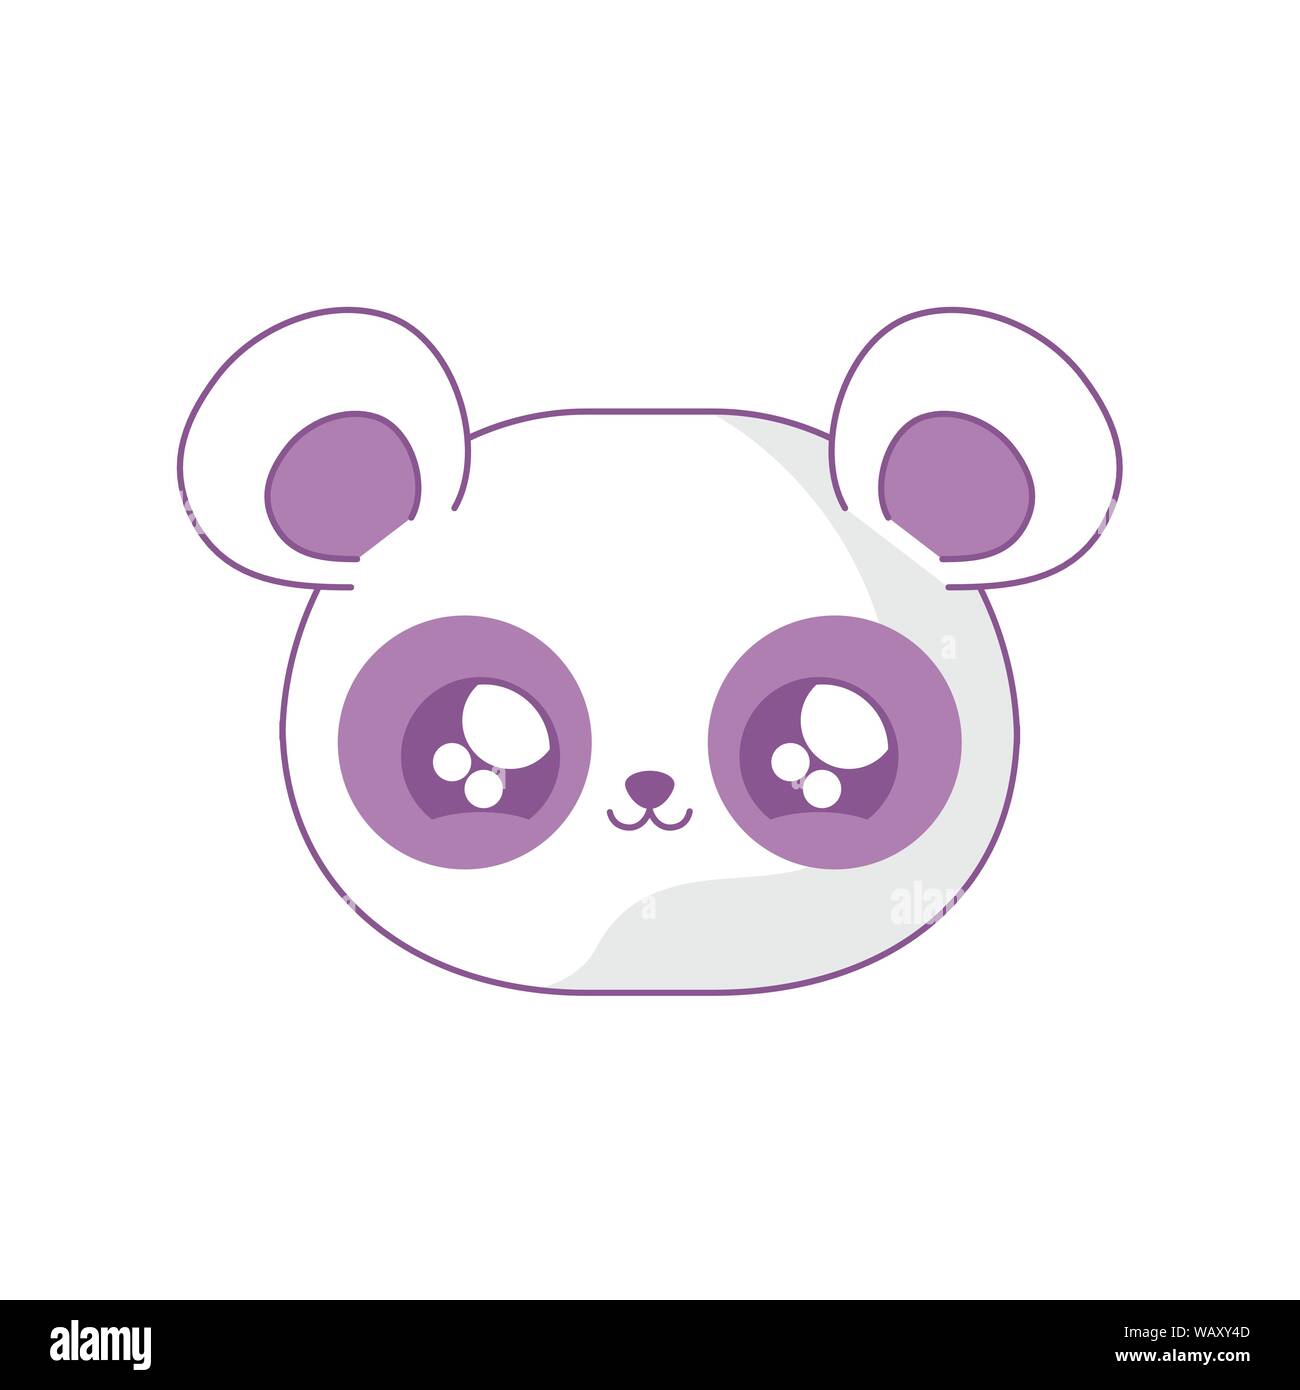 Cabeza de oso panda bebé animal estilo kawaii diseño ilustración vectorial  Imagen Vector de stock - Alamy